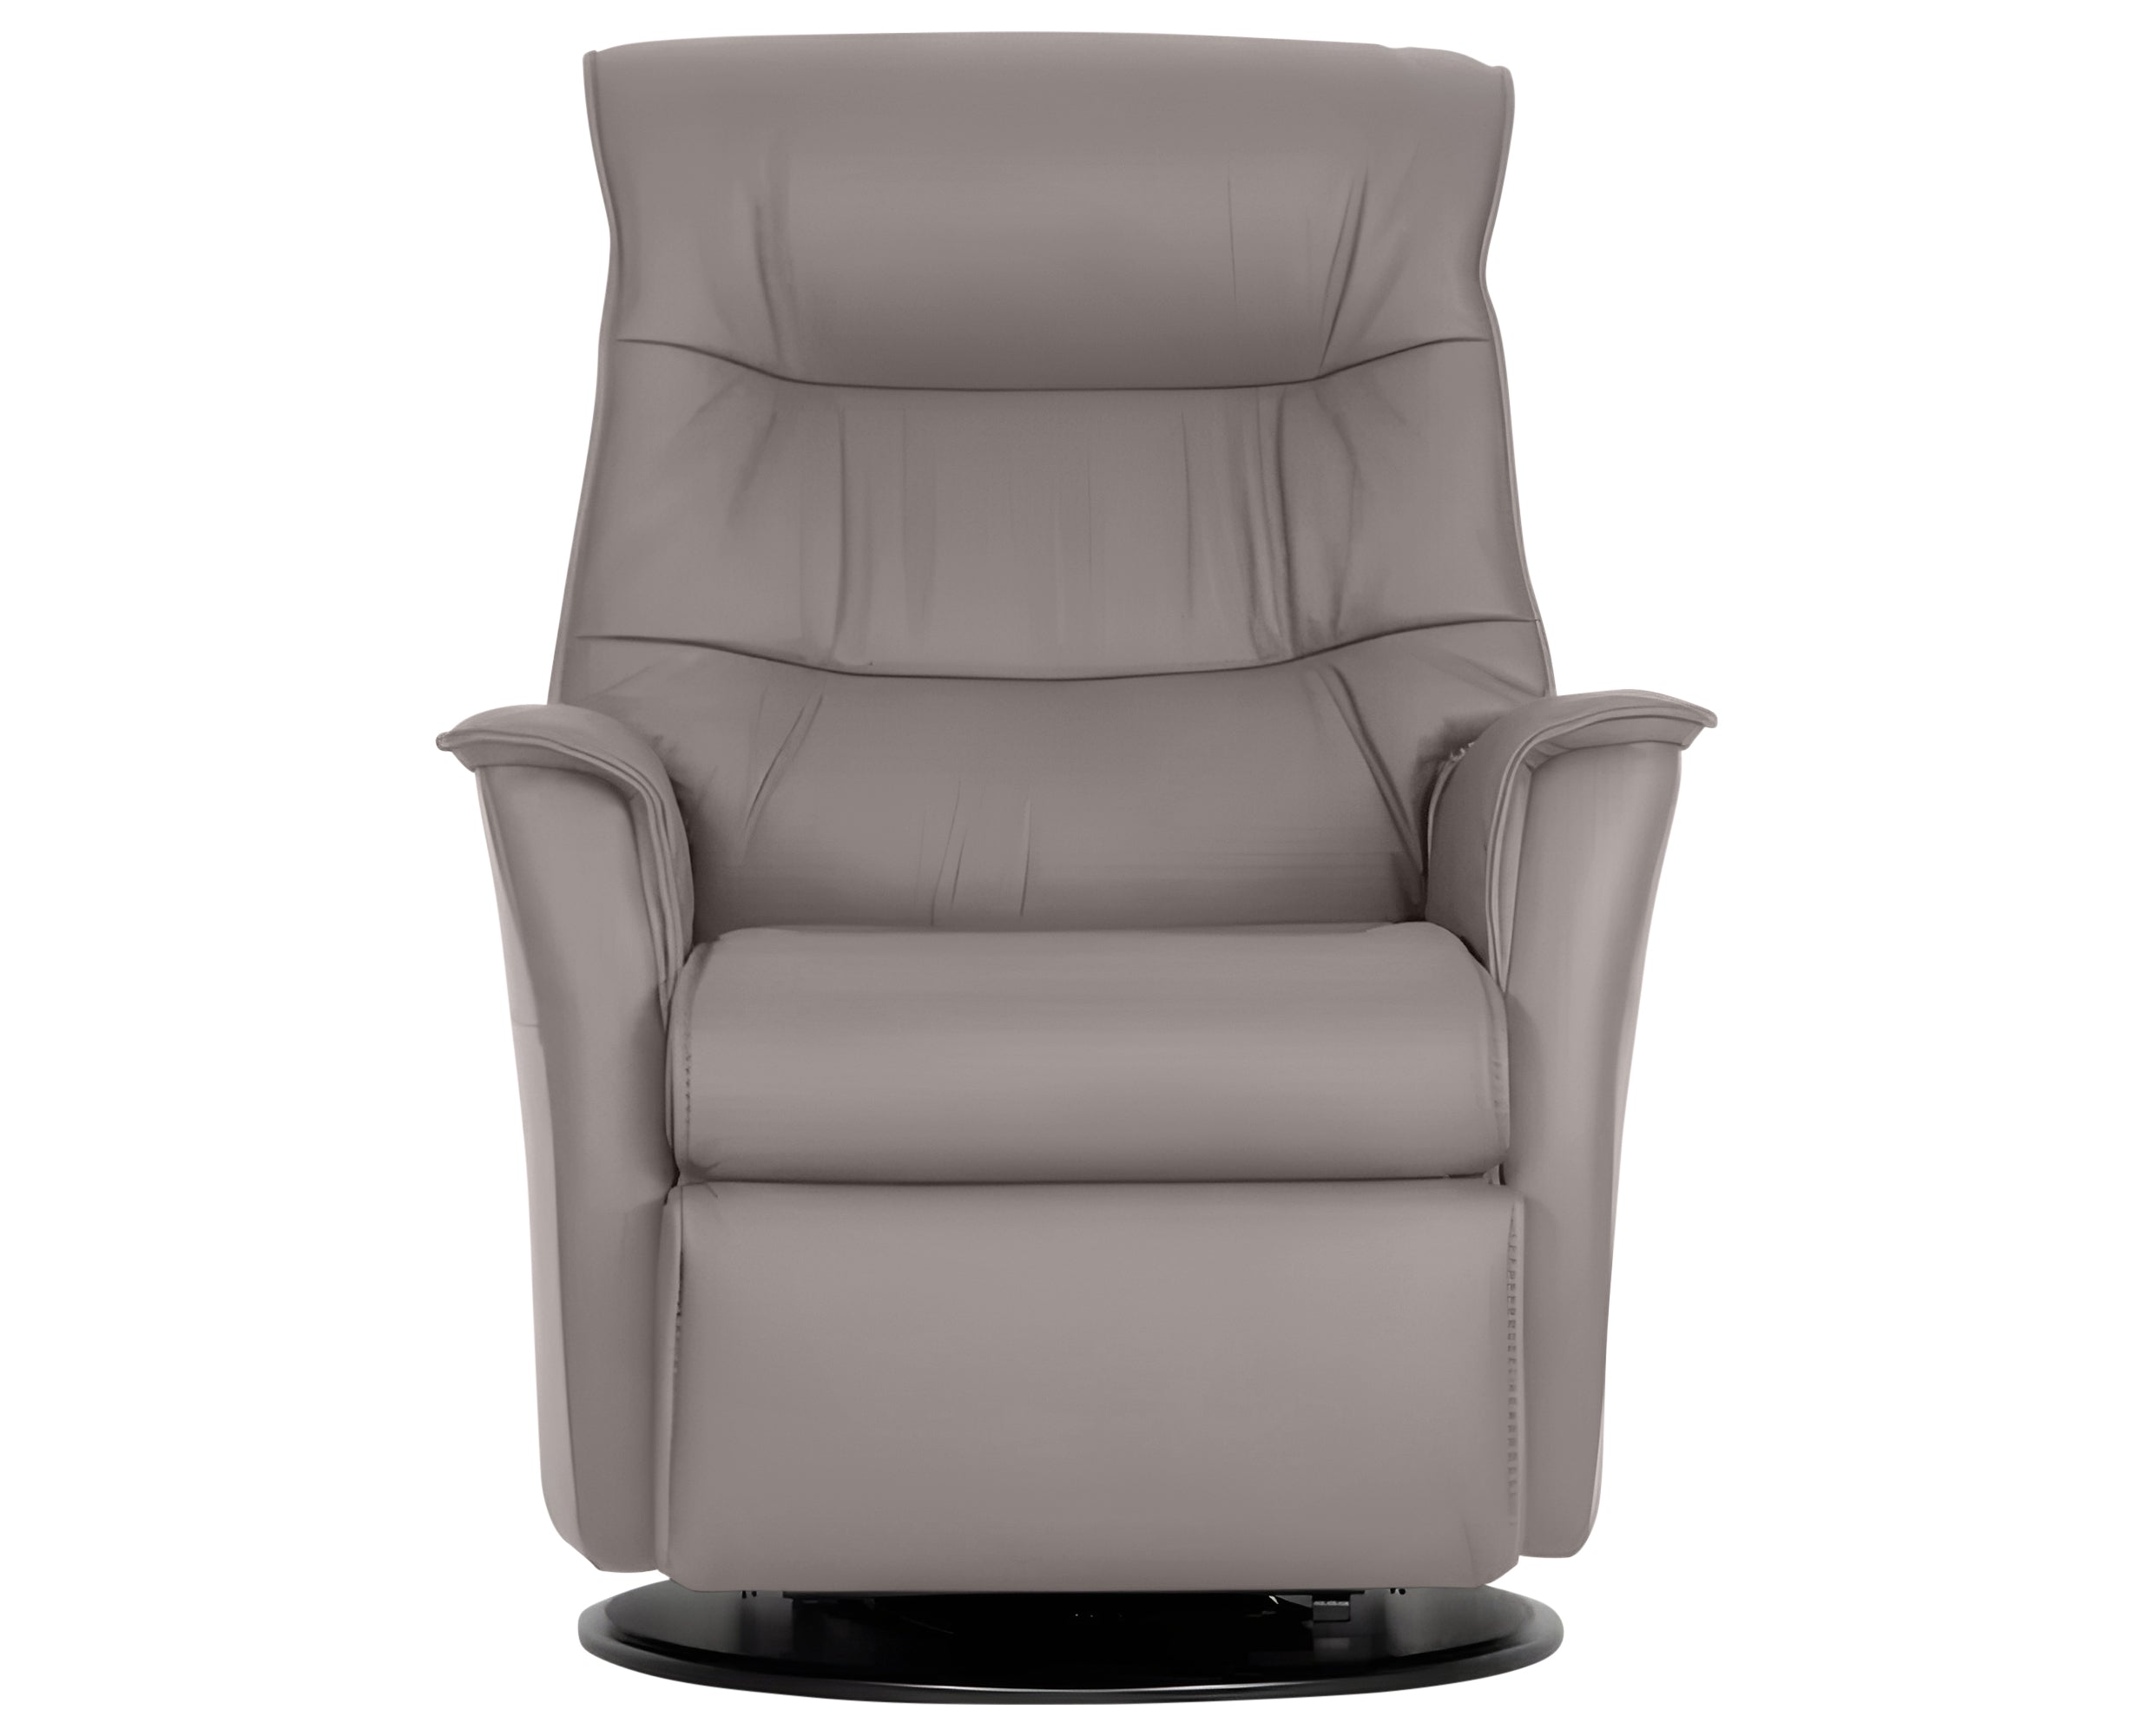 Trend Leather Cinder L | Norwegian Comfort Paramount Recliner - Promo | Valley Ridge Furniture